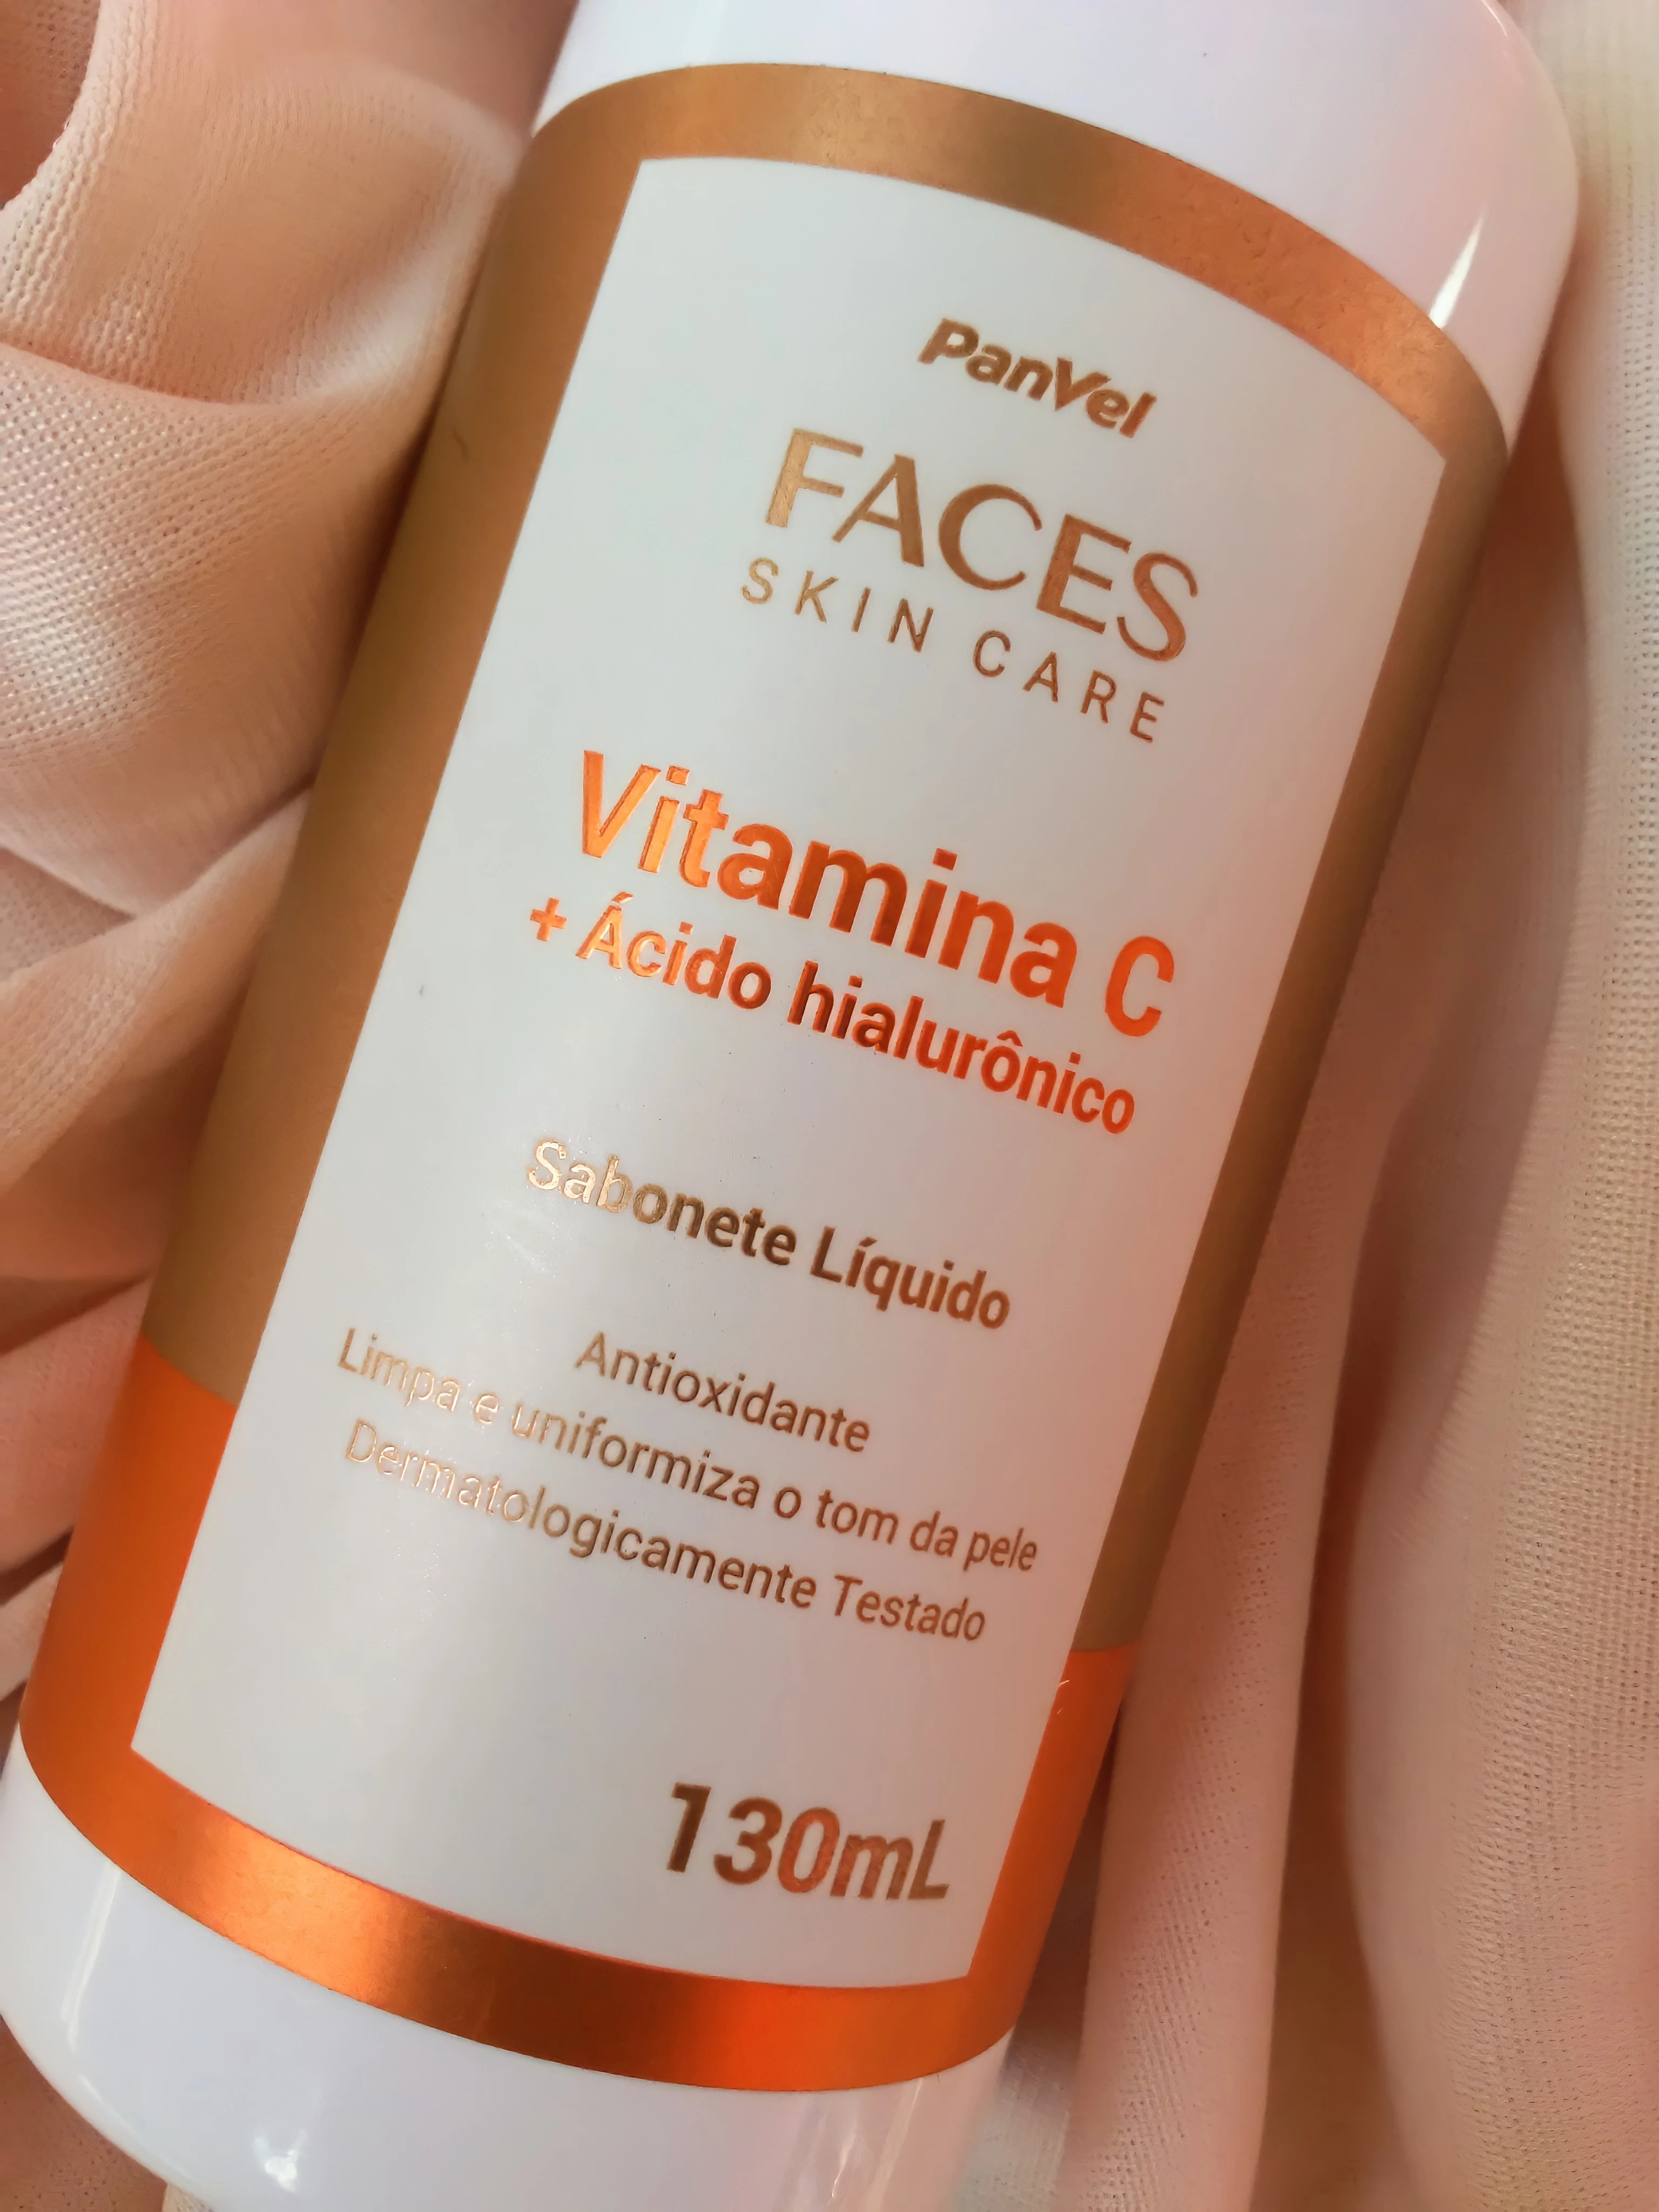 sabonete-facial-panvel-faces-vitamina-c-blog-linda-so-pra-mim